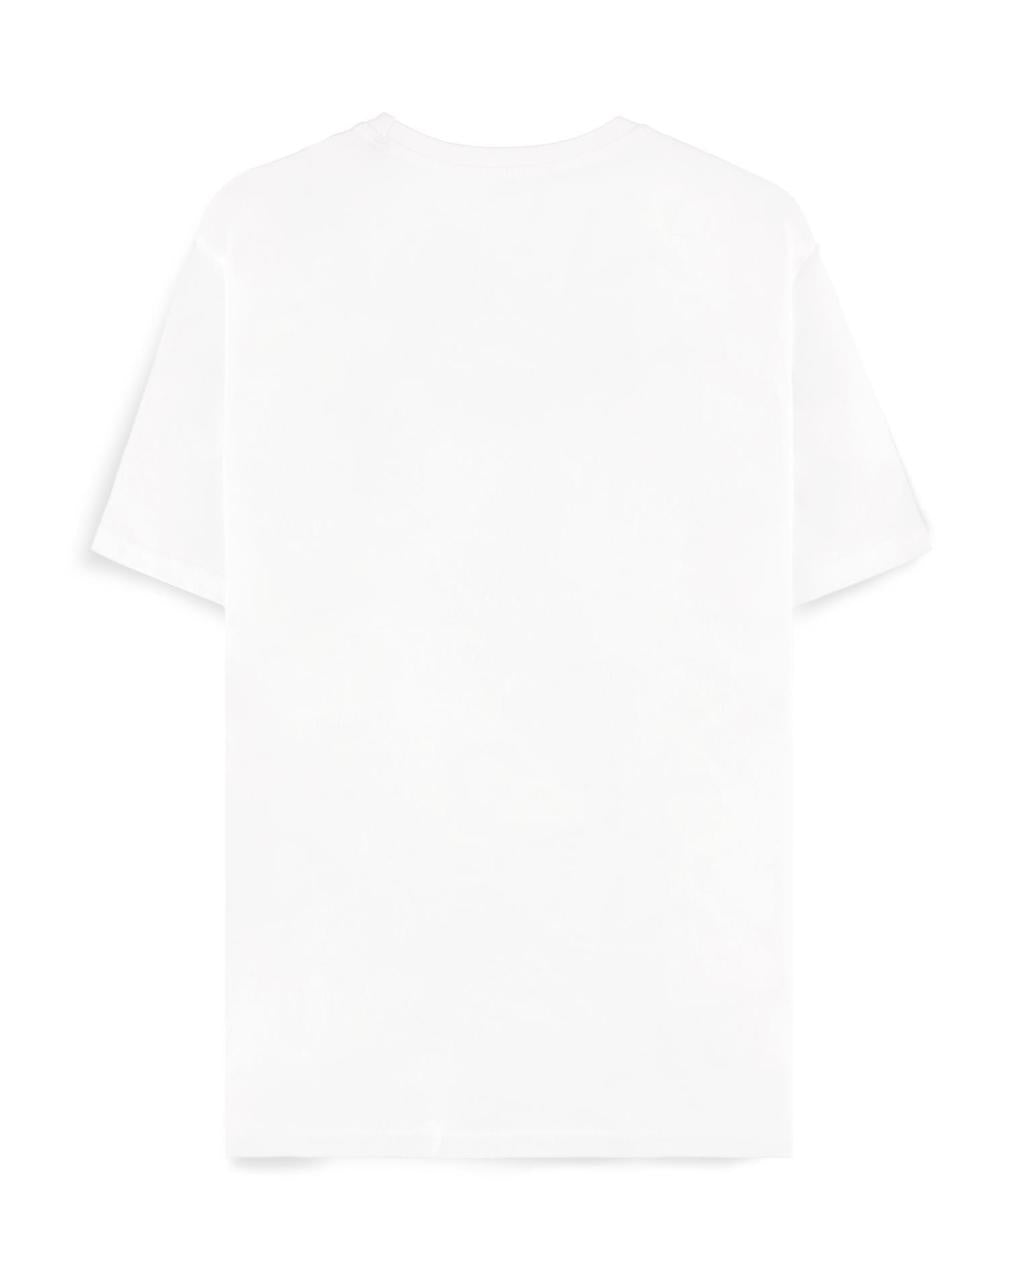 MY HERO ACADEMIA - All Might - Men's T-shirt (XL)